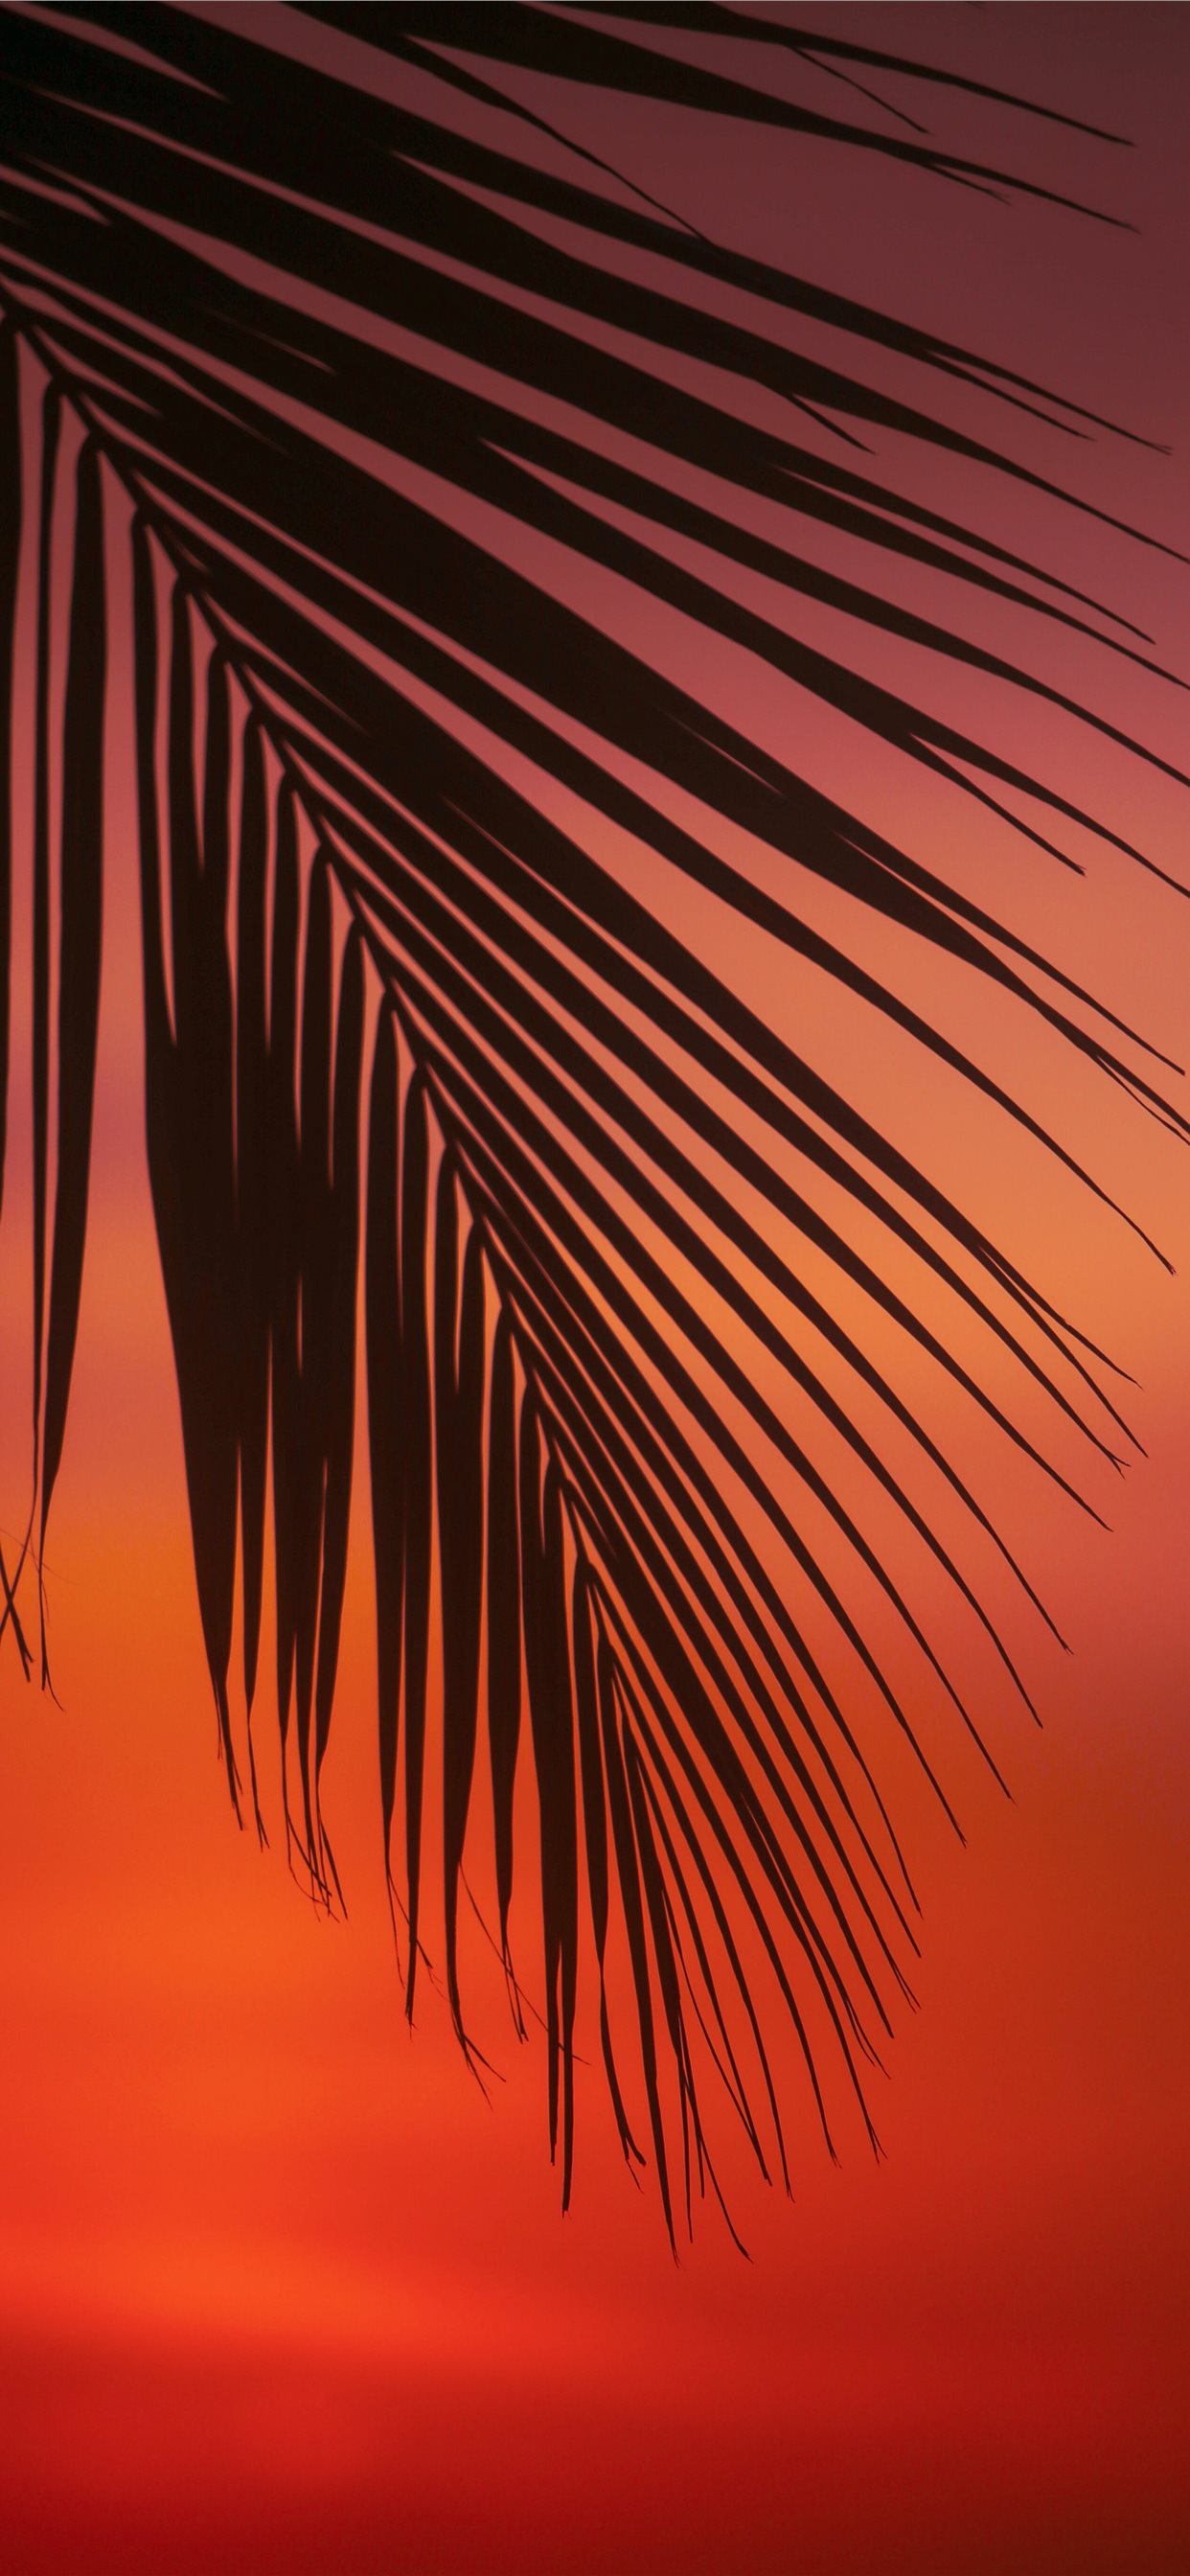 palm tree leaf iPhone X Wallpaper Free Download